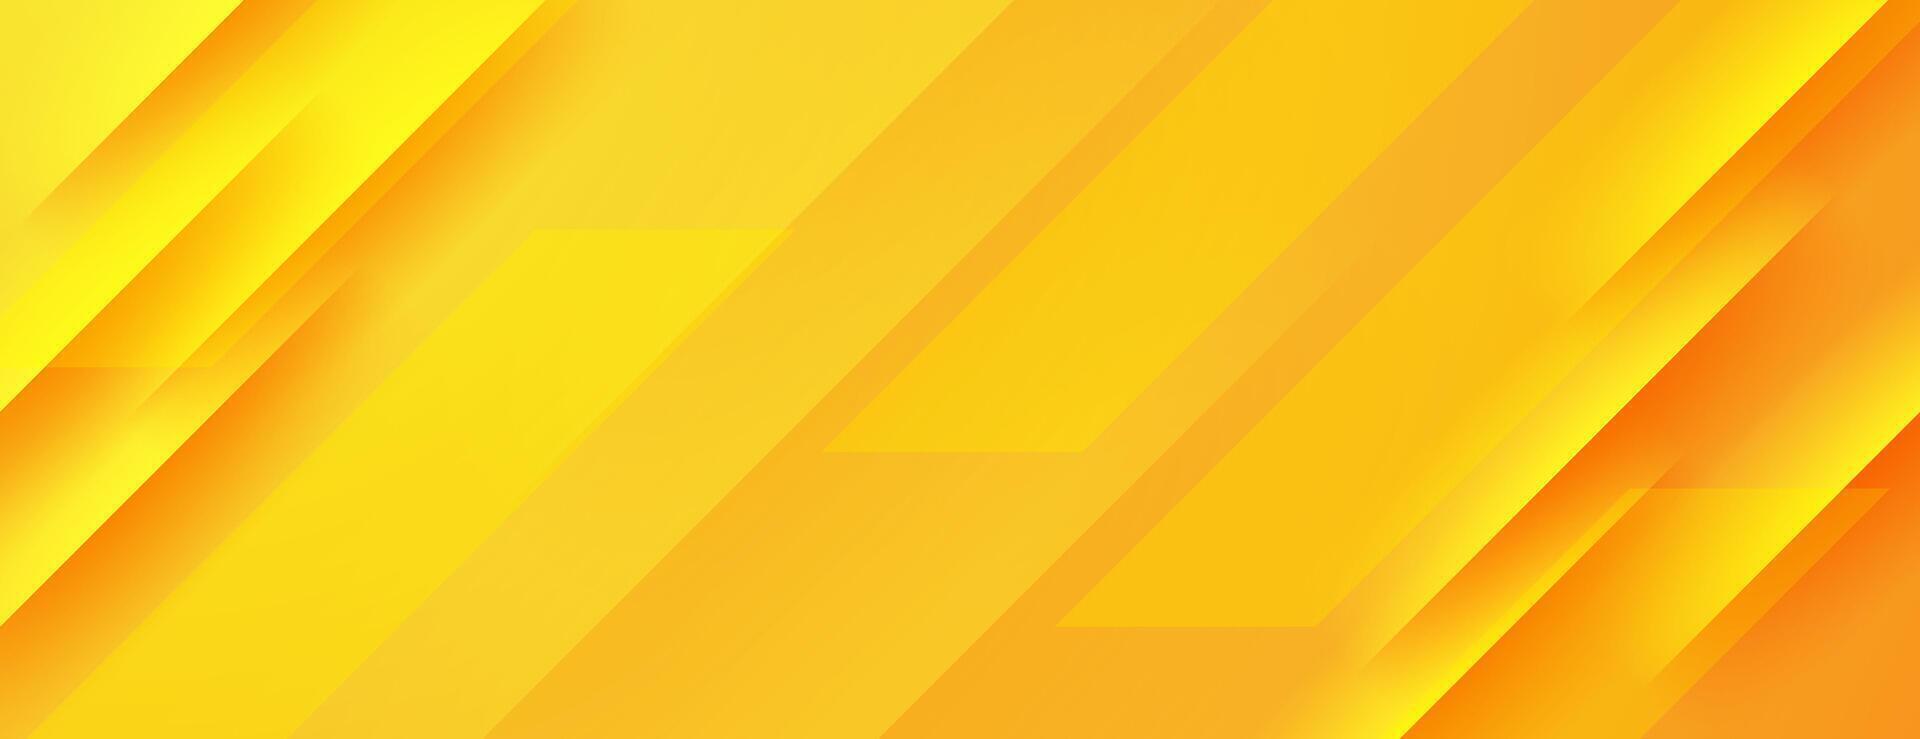 resumen amarillo antecedentes con diagonal rayas. vector ilustración